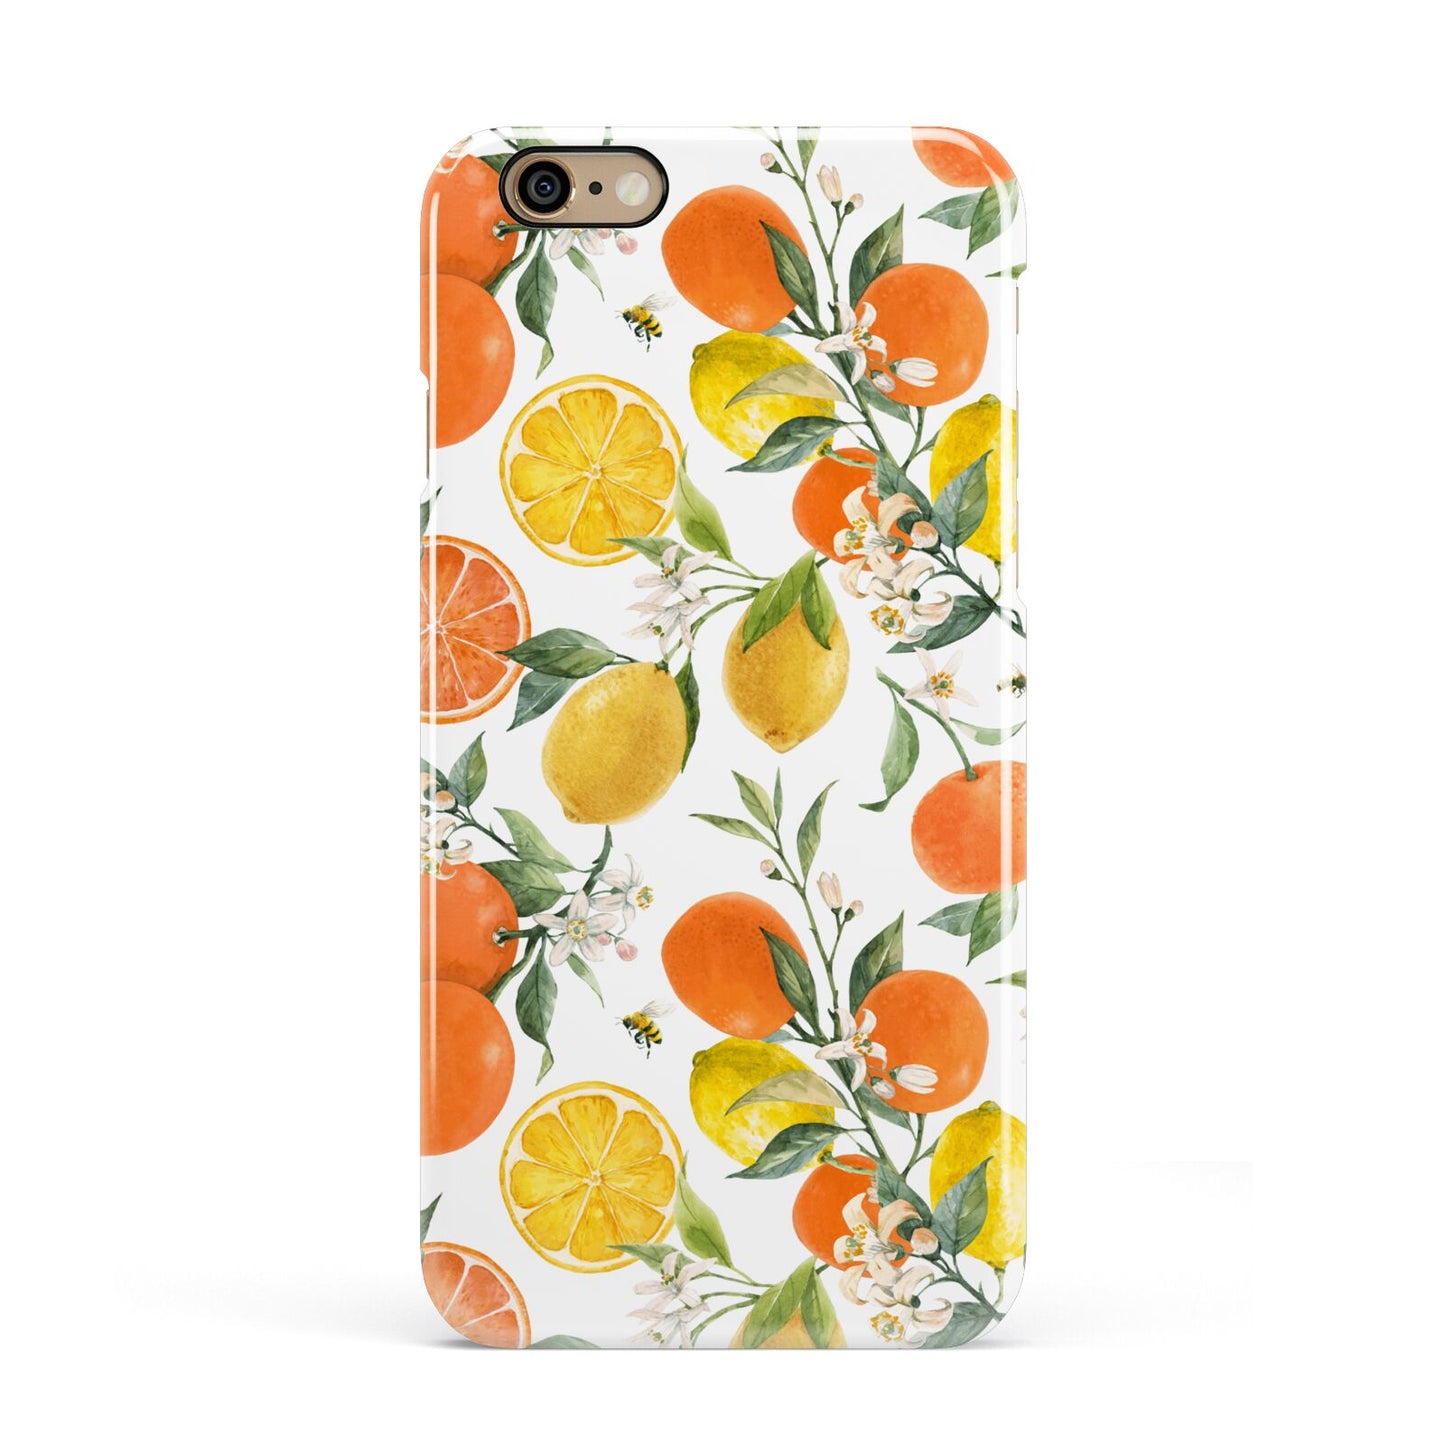 Lemons and Oranges Apple iPhone 6 3D Snap Case